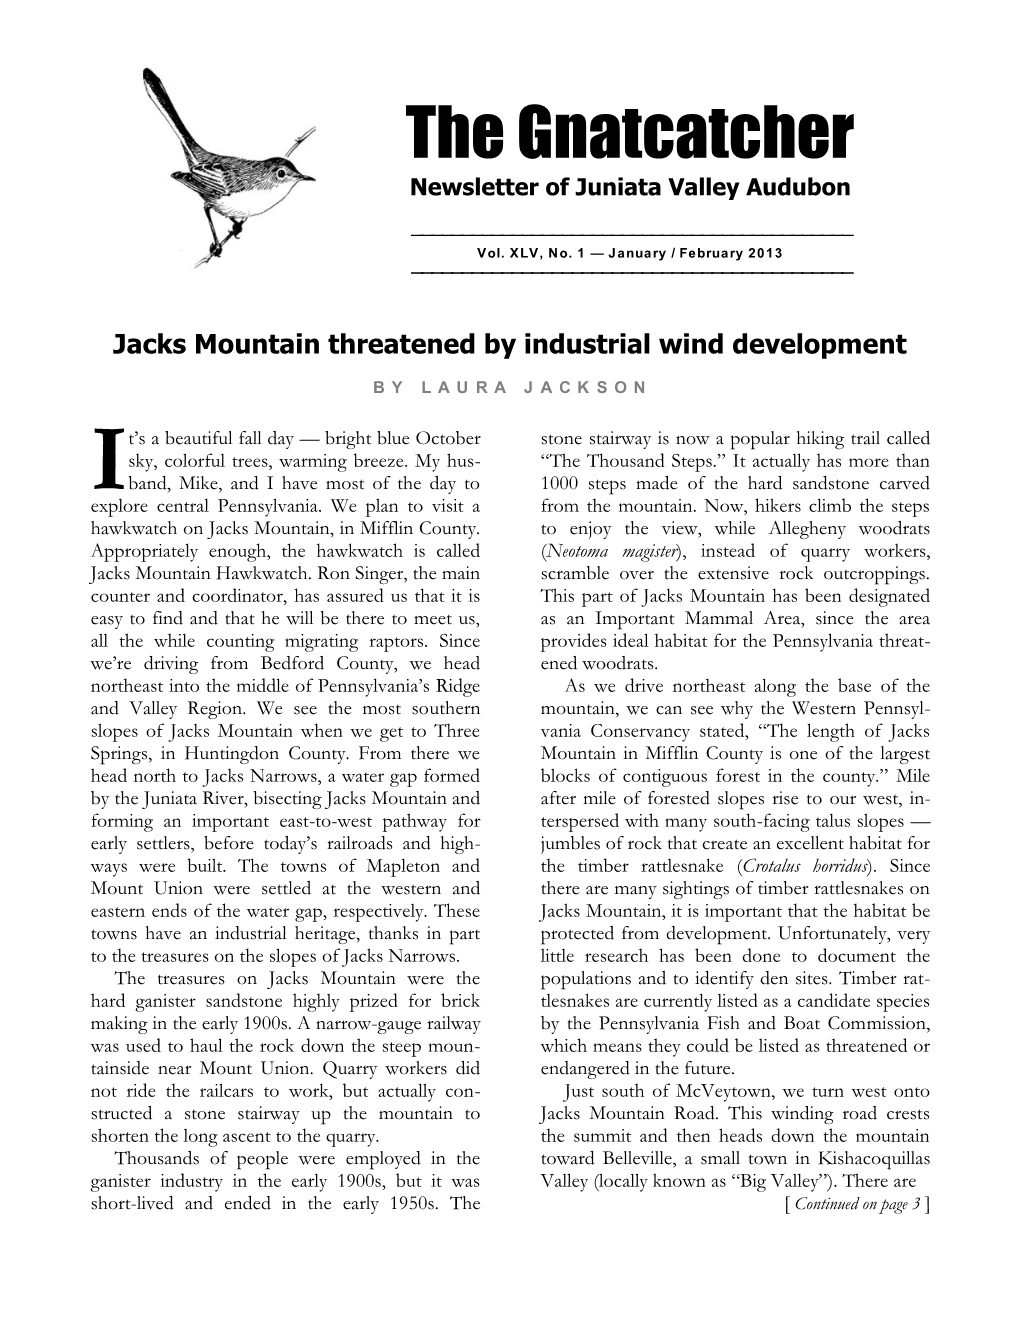 The Gnatcatcher Newsletter of Juniata Valley Audubon